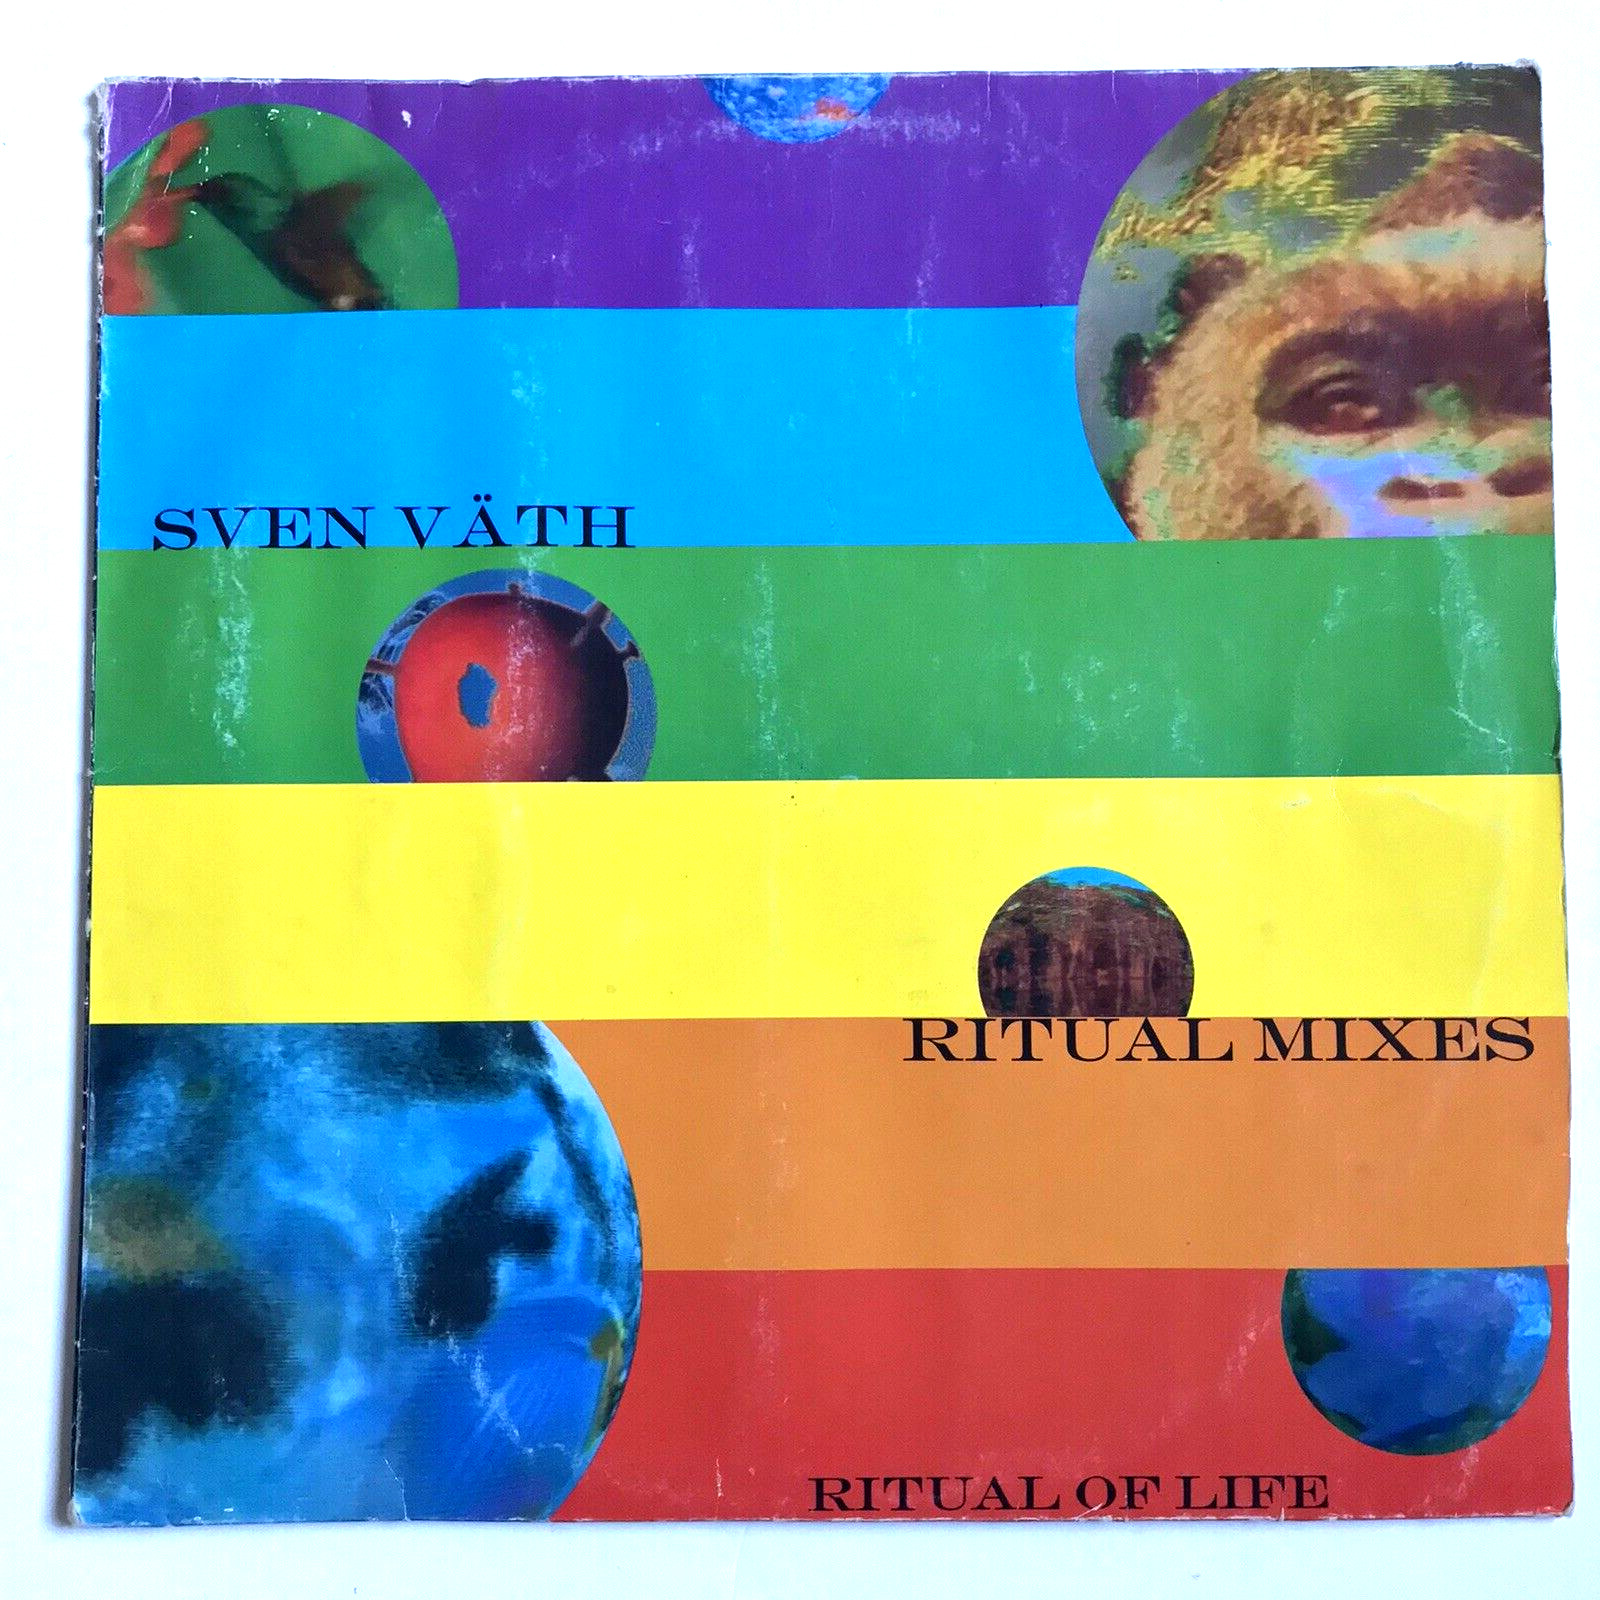 SVEN VATH - Ritual Of Life (Ritual Mixes) 1993 Trance / Acid 12" Vinyl